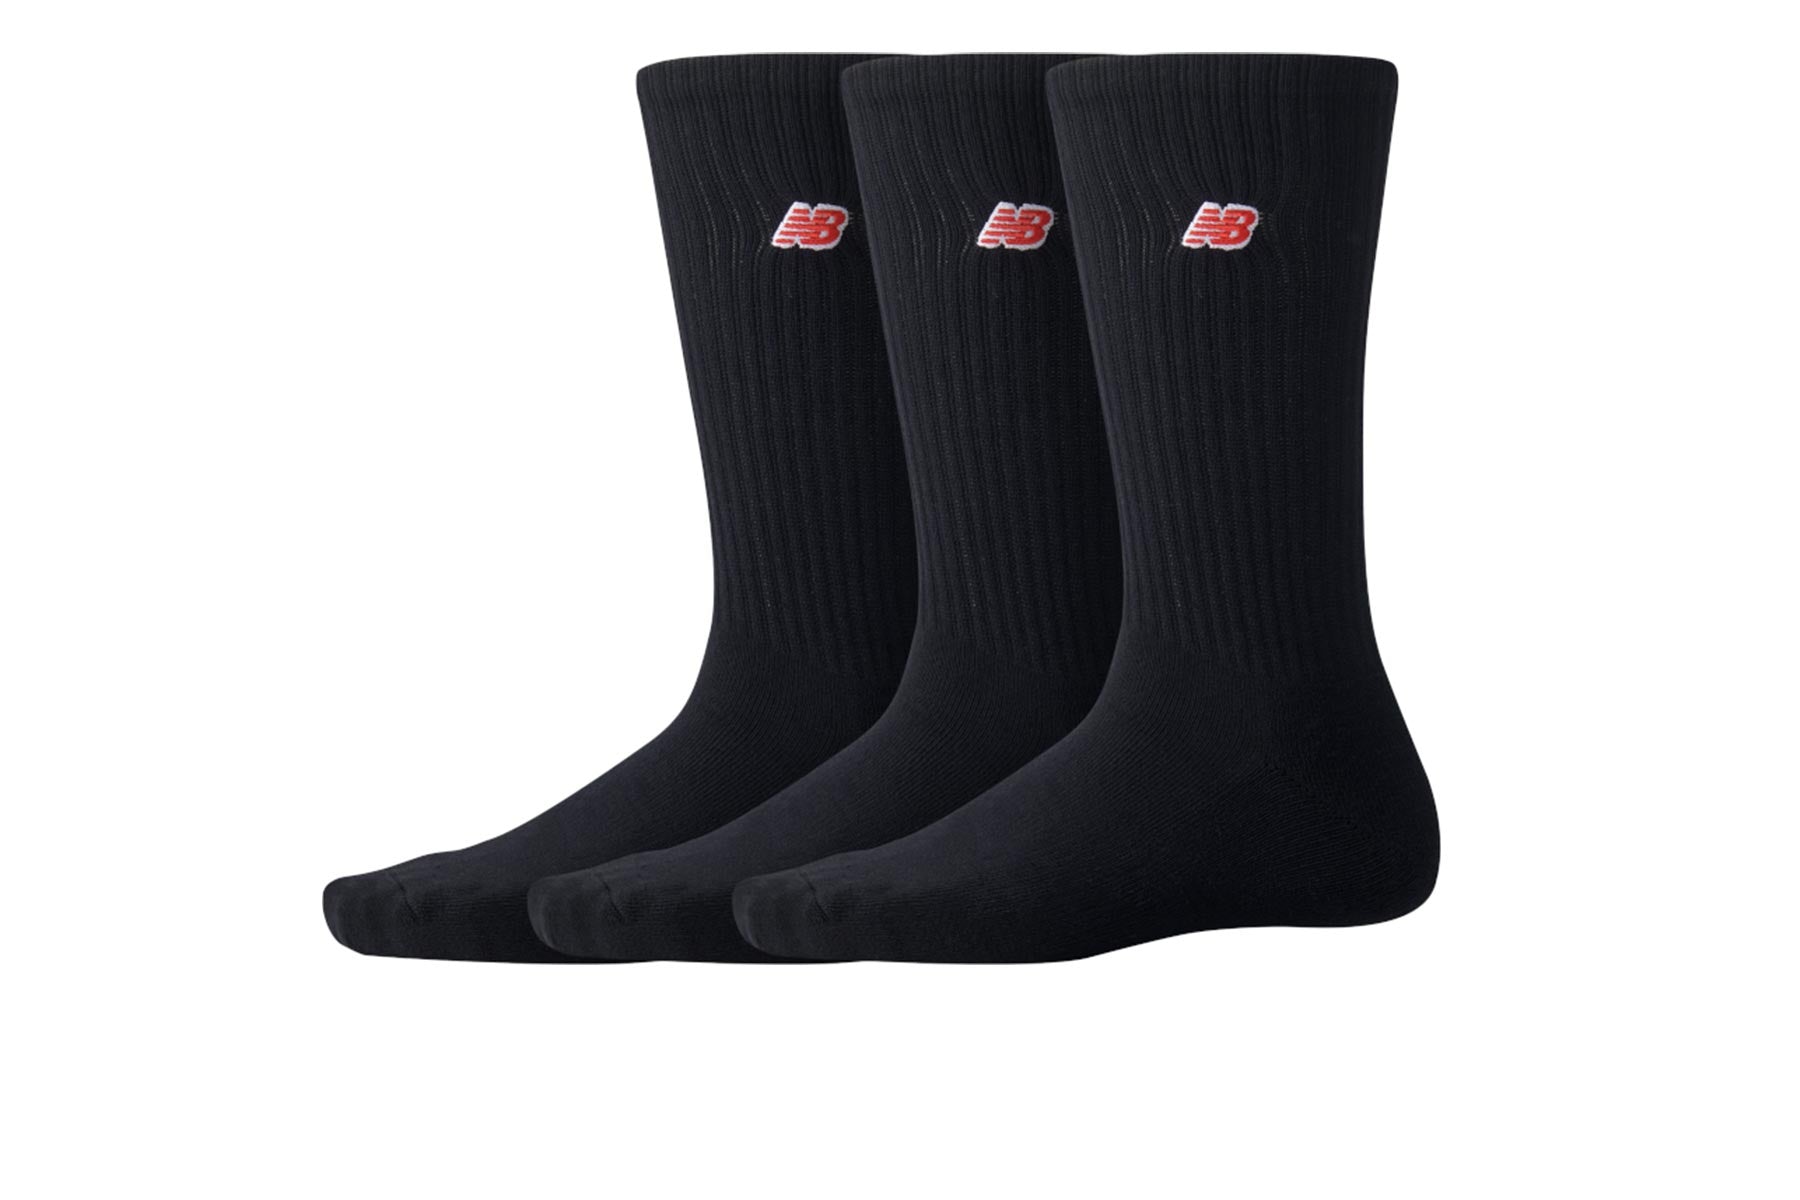 New Balance Patch Crew Socks (3 Pack) - Black